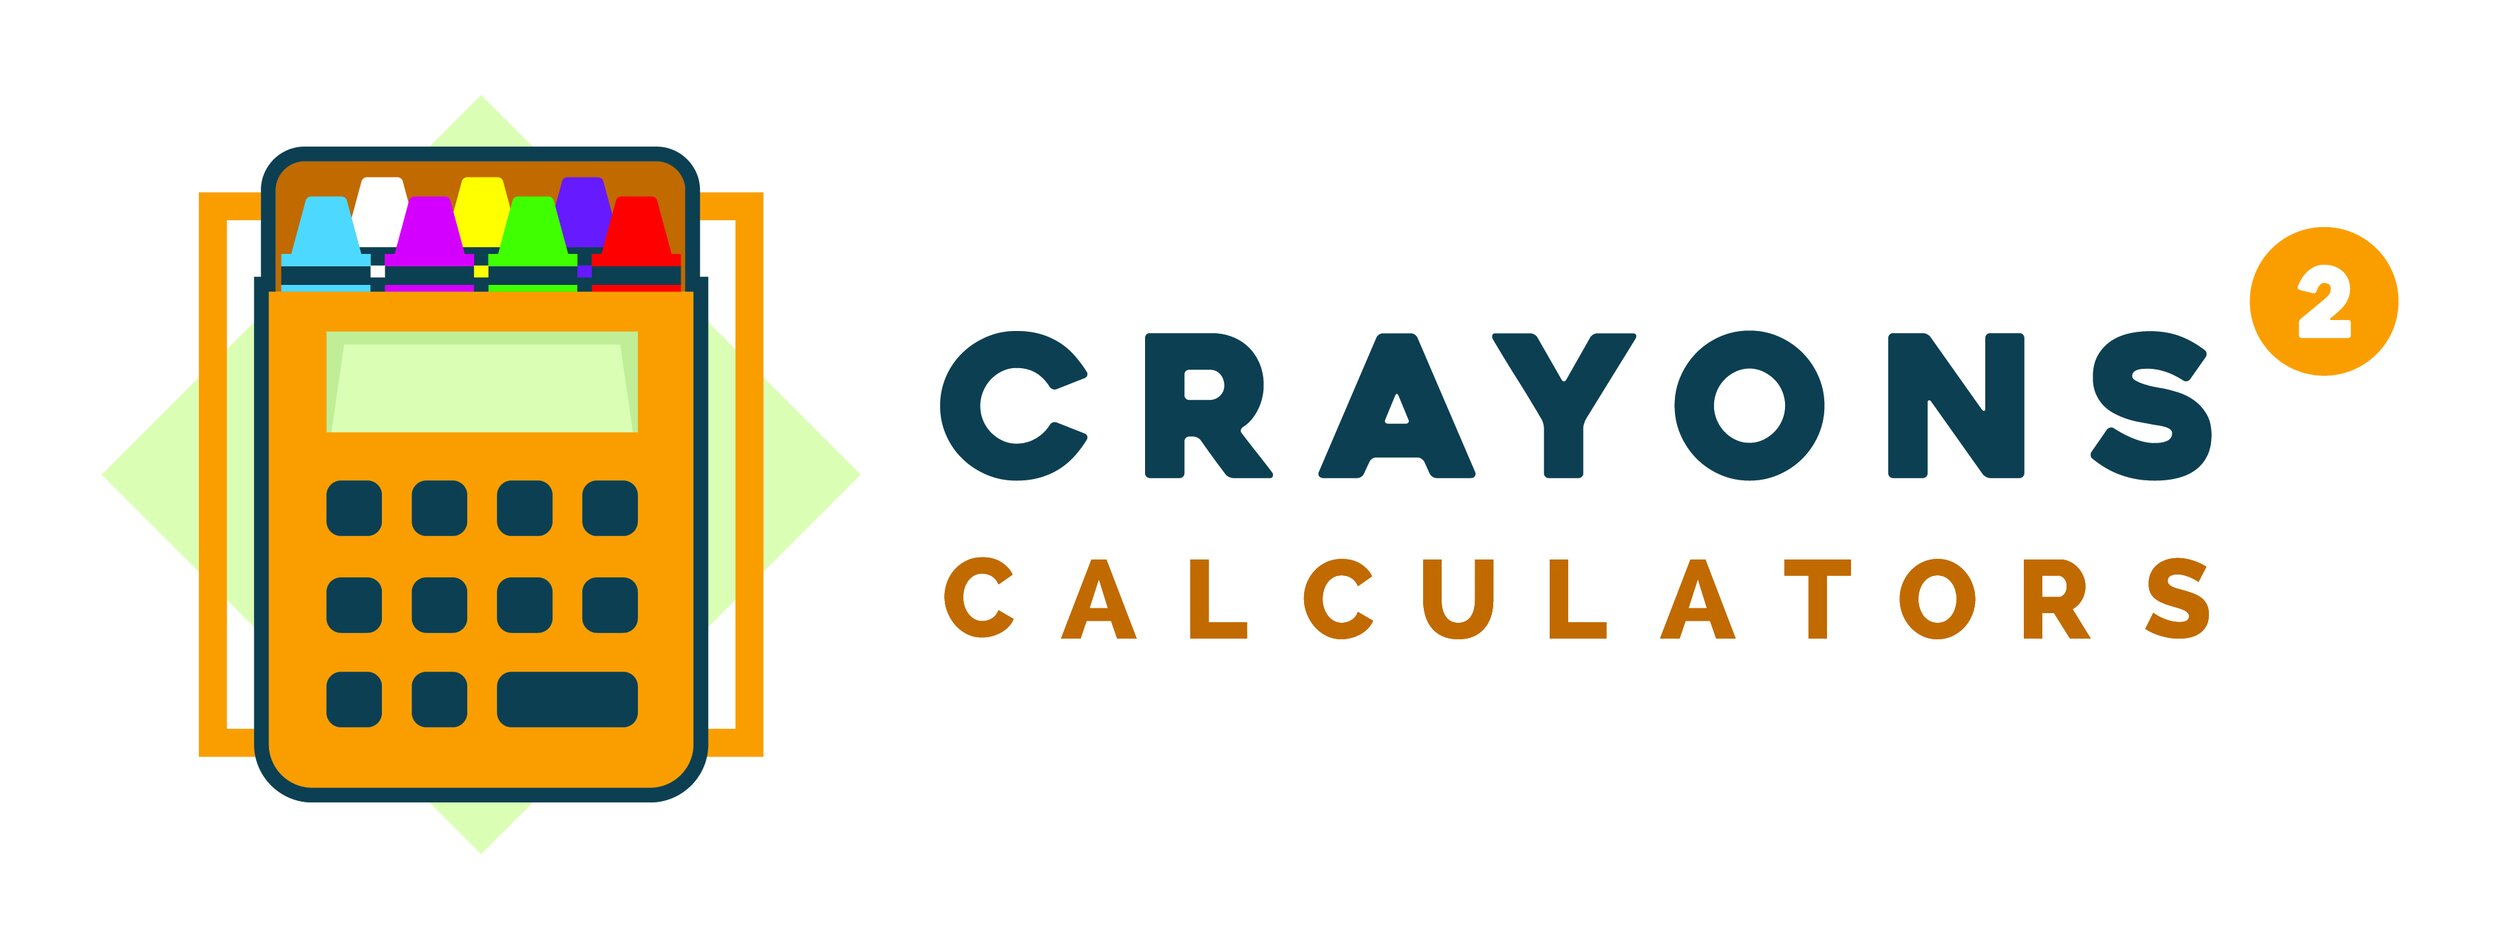 Crayons 2 Calculators